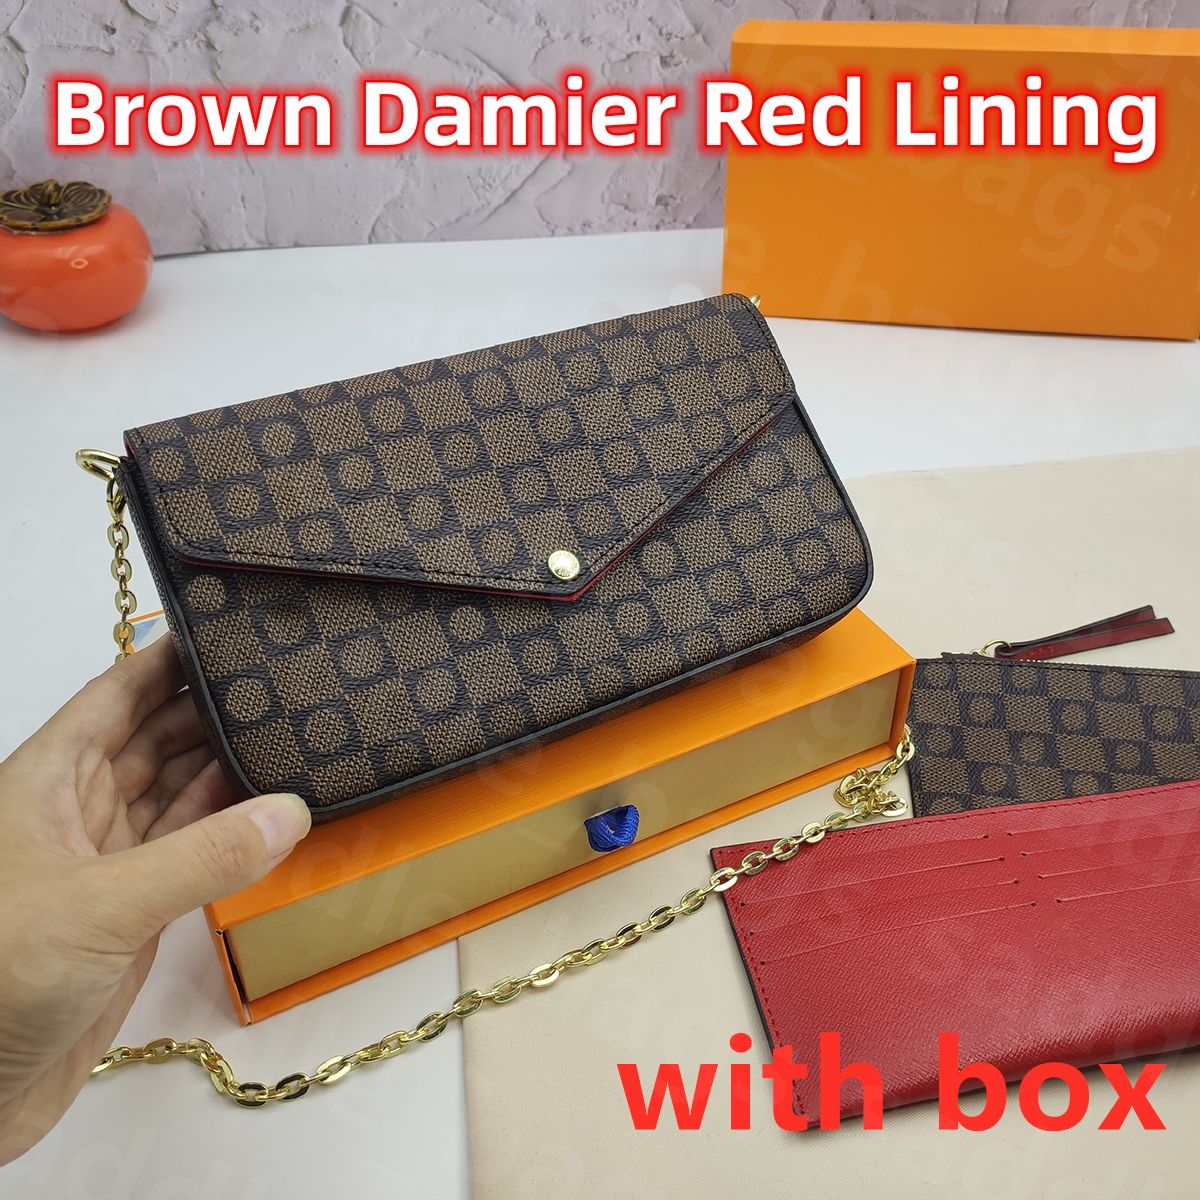 Brown Damier Red Lining